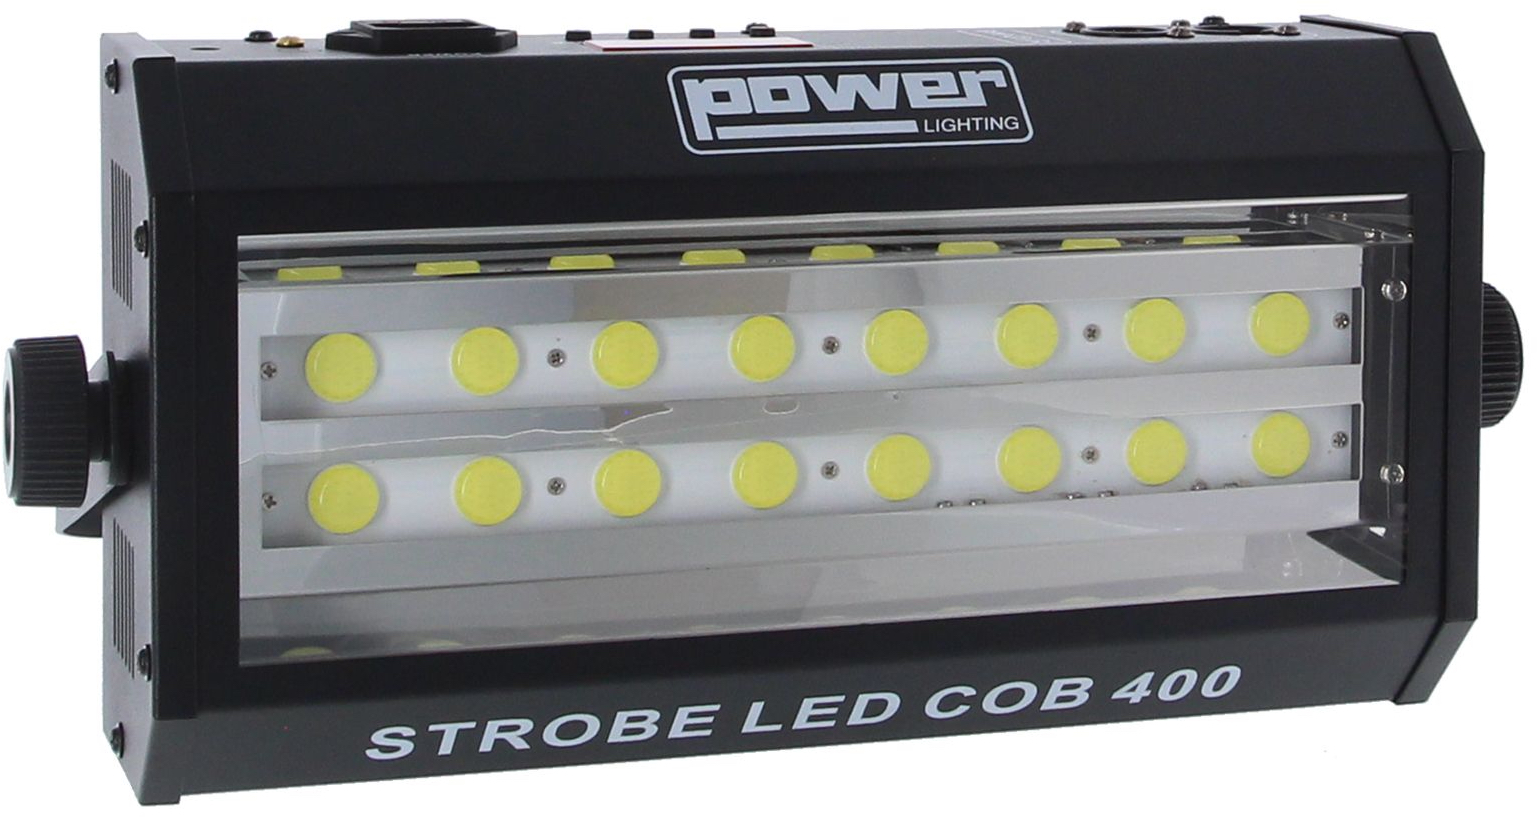 Power Lighting Strobe Led Cob 400 - Stroboscoop - Variation 1